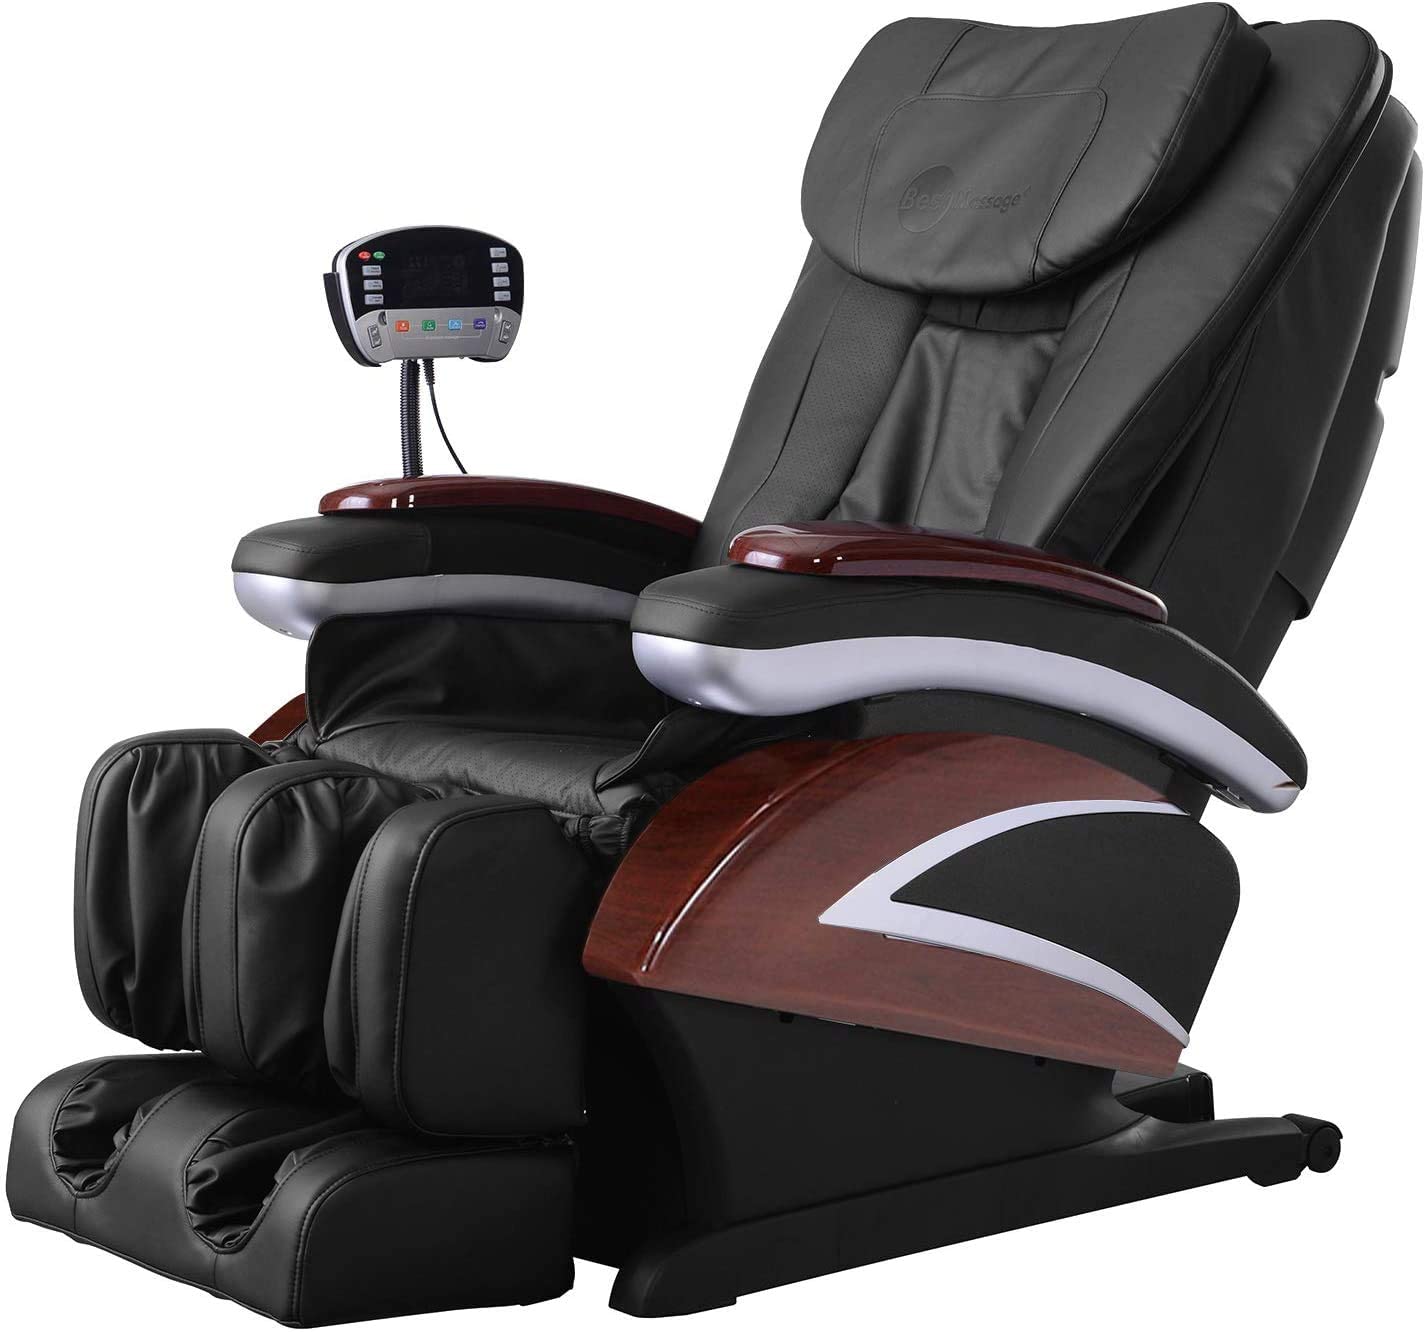 3. Electric Full Body Shiatsu Massage Chair